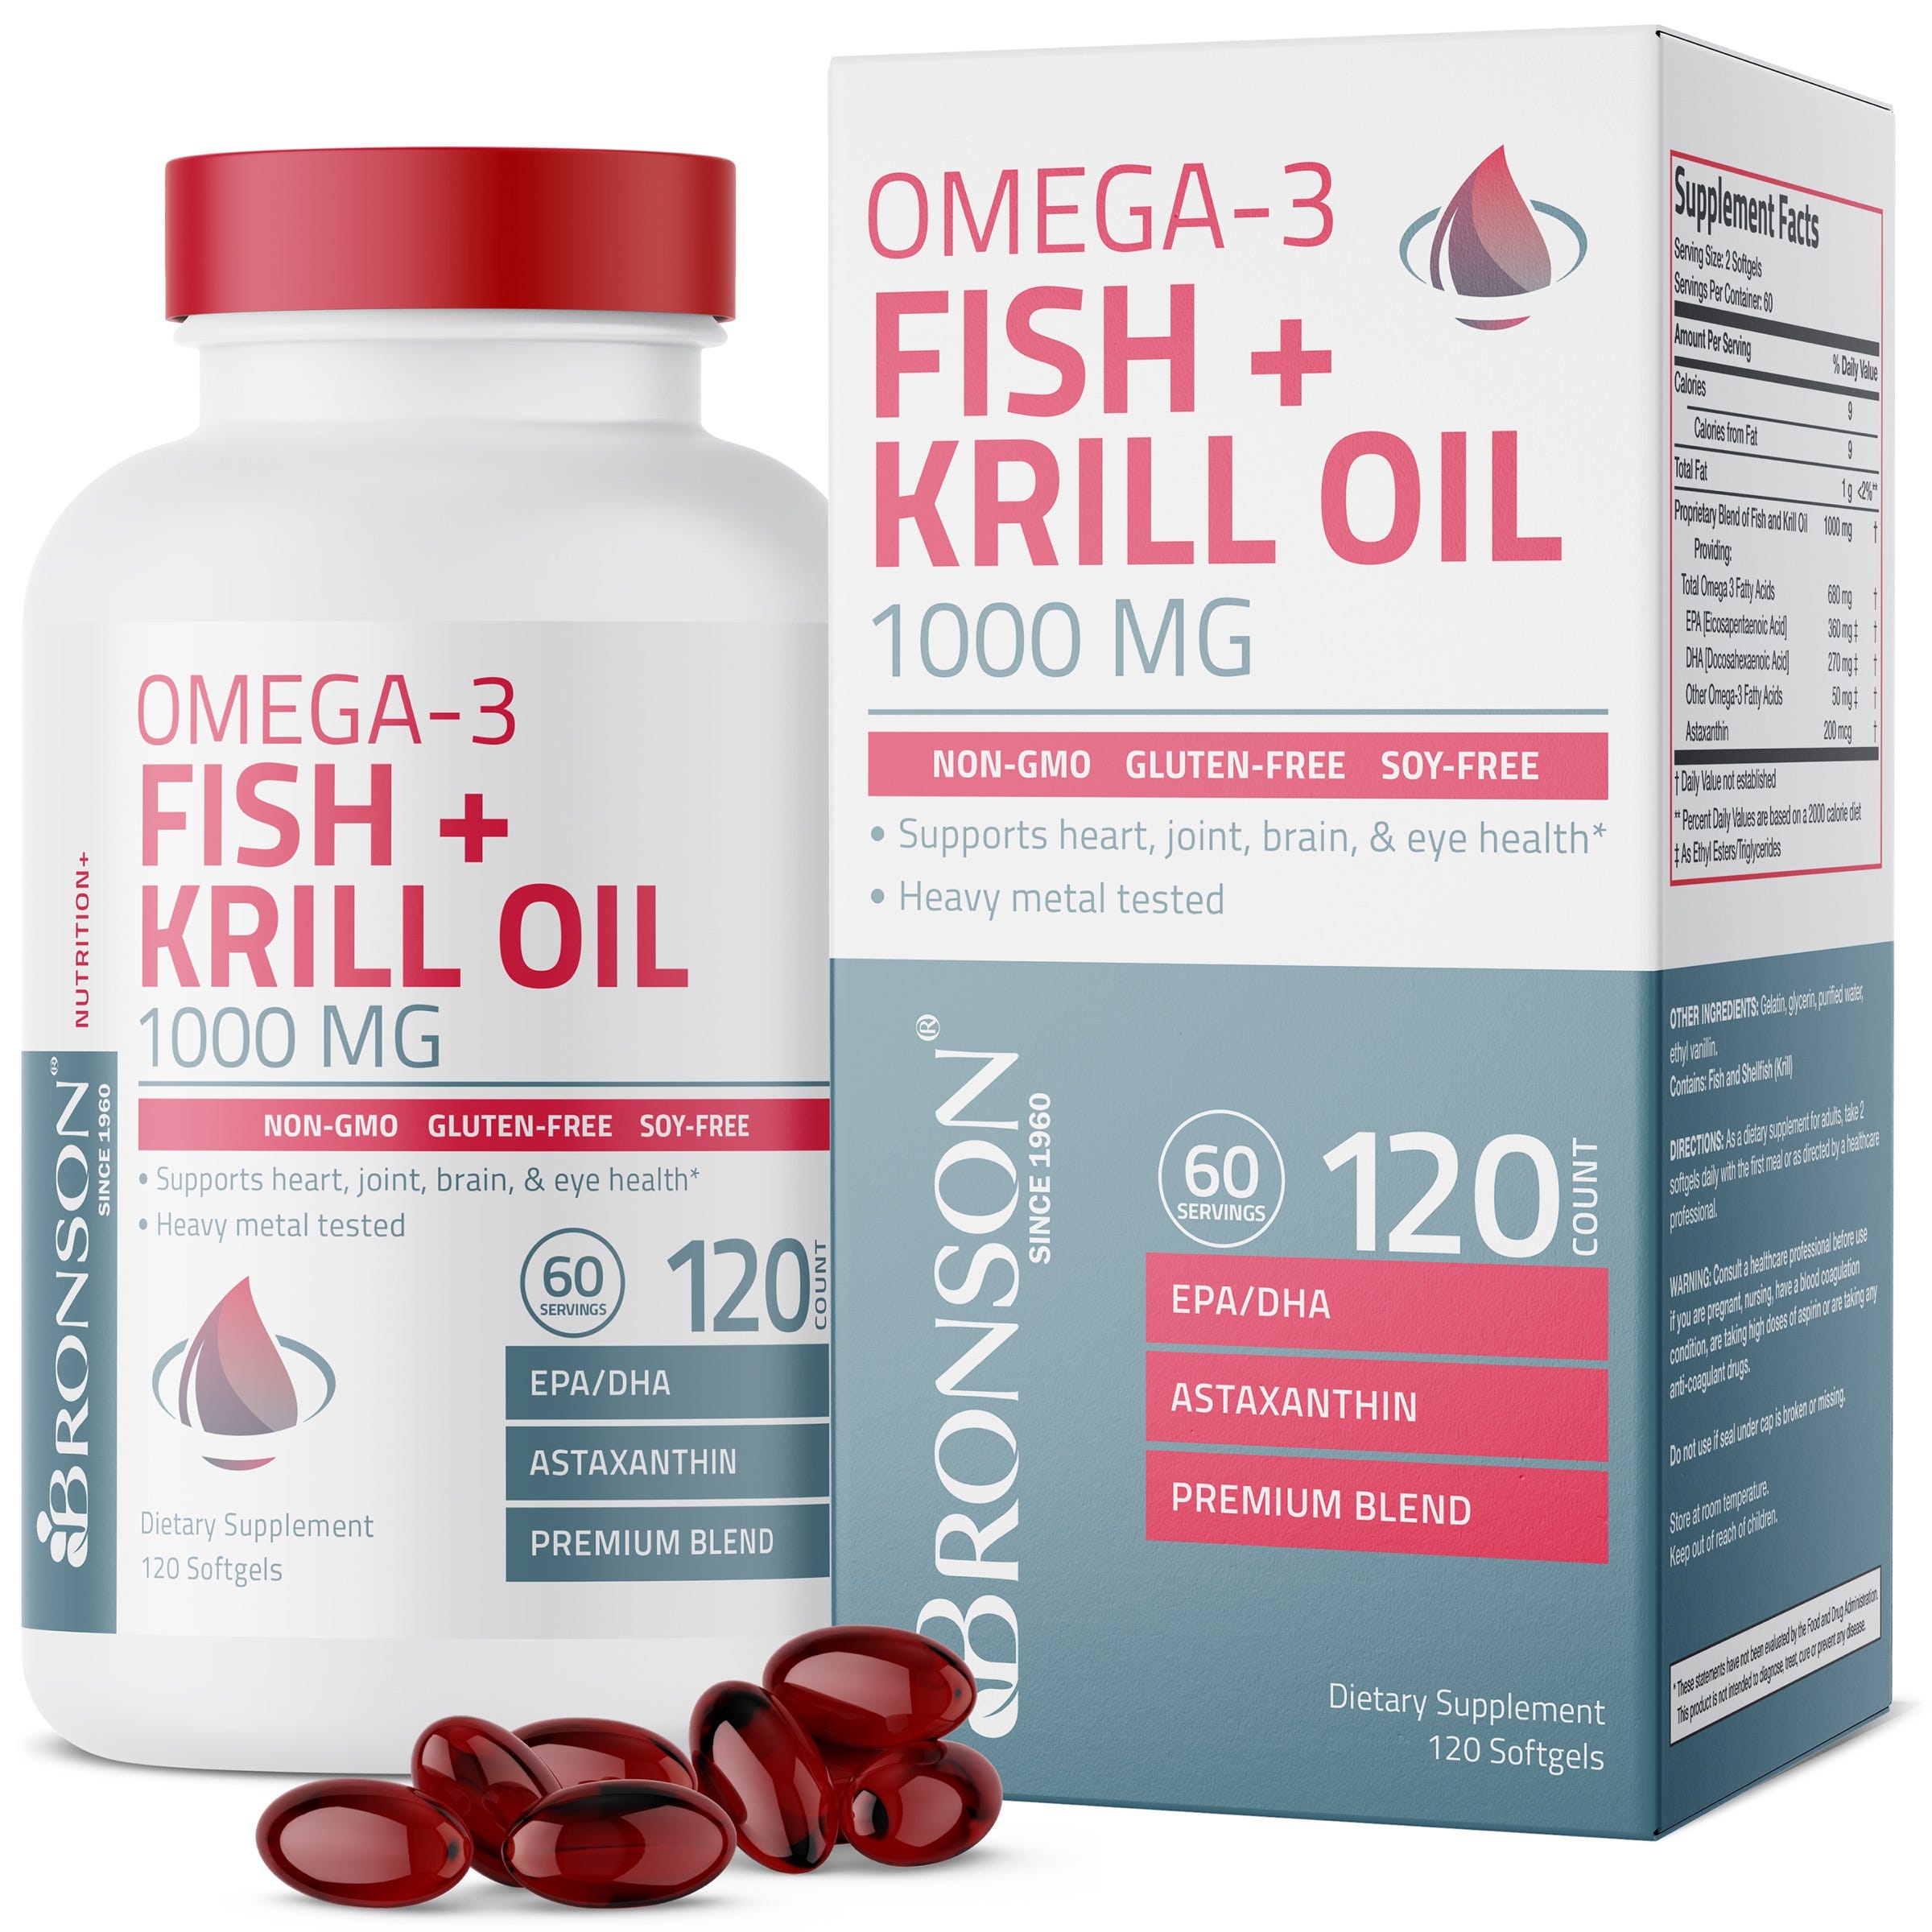 Omega-3 Fish + Krill Oil 1000 MG 120 Softgels view 1 of 7